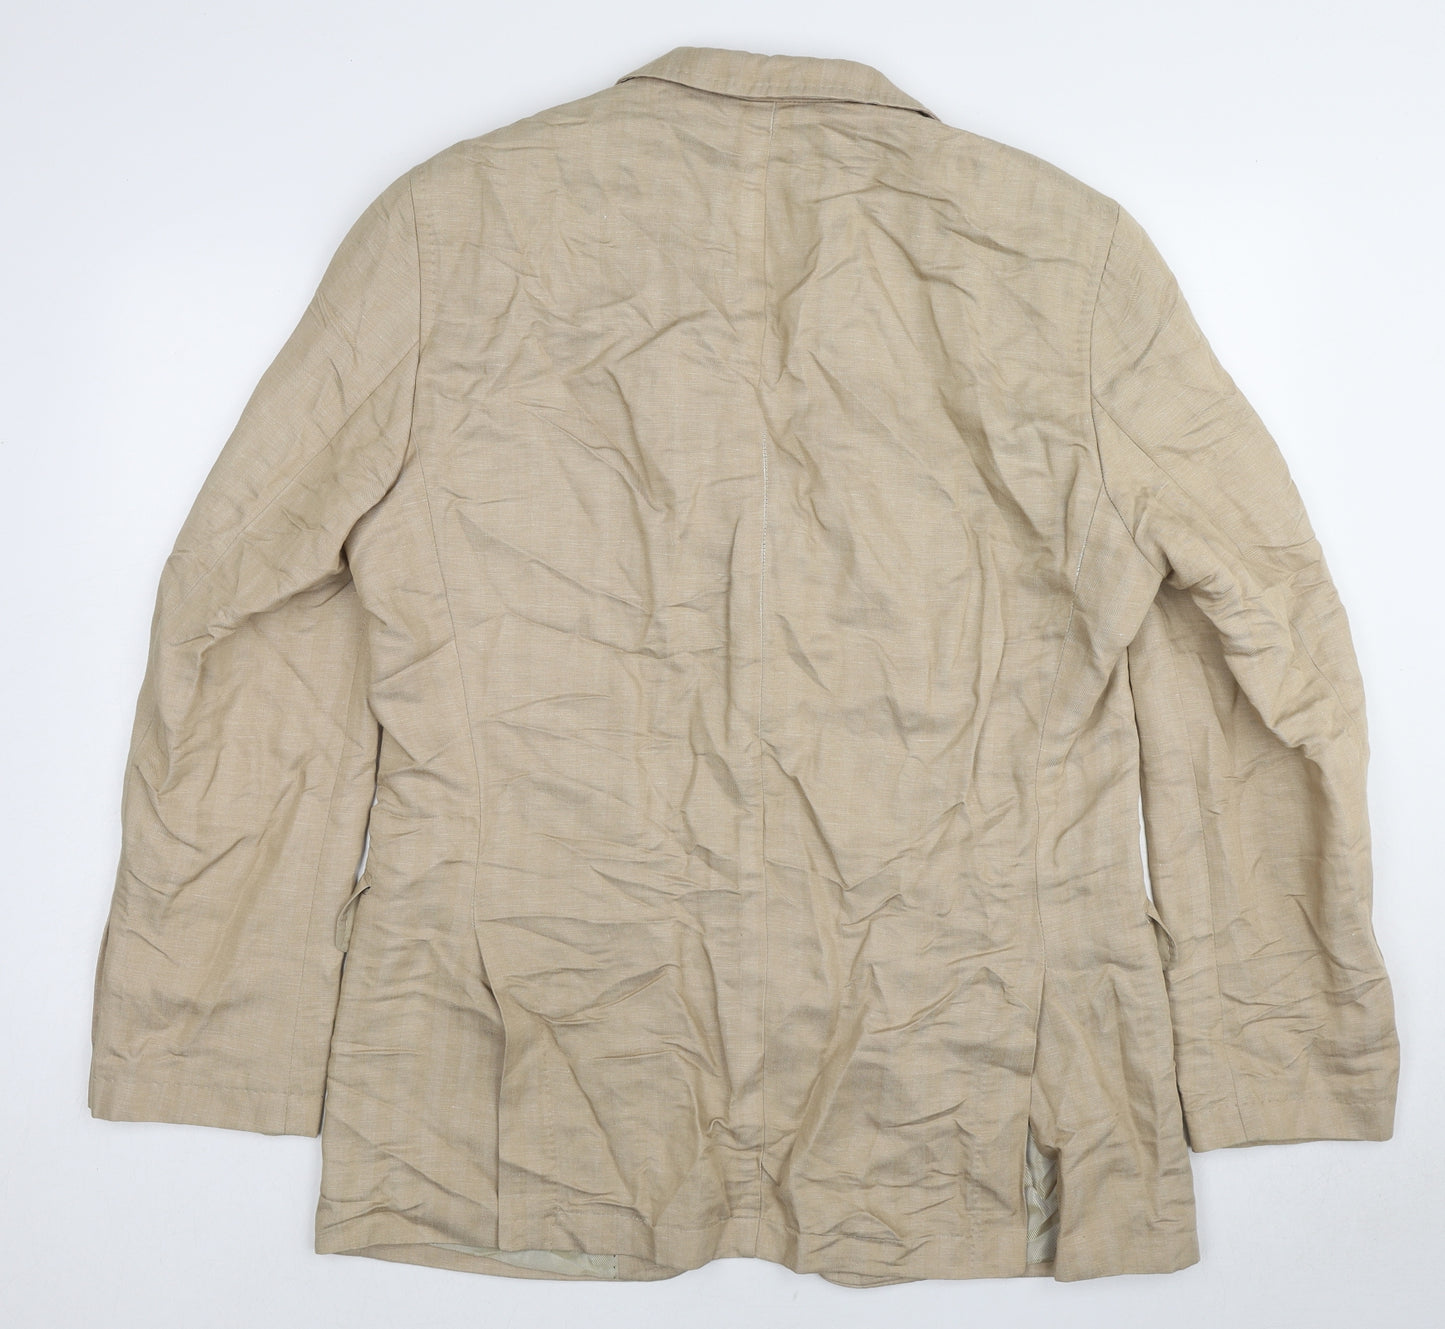 STONES Mens Beige Striped Linen Jacket Suit Jacket Size 42 Regular